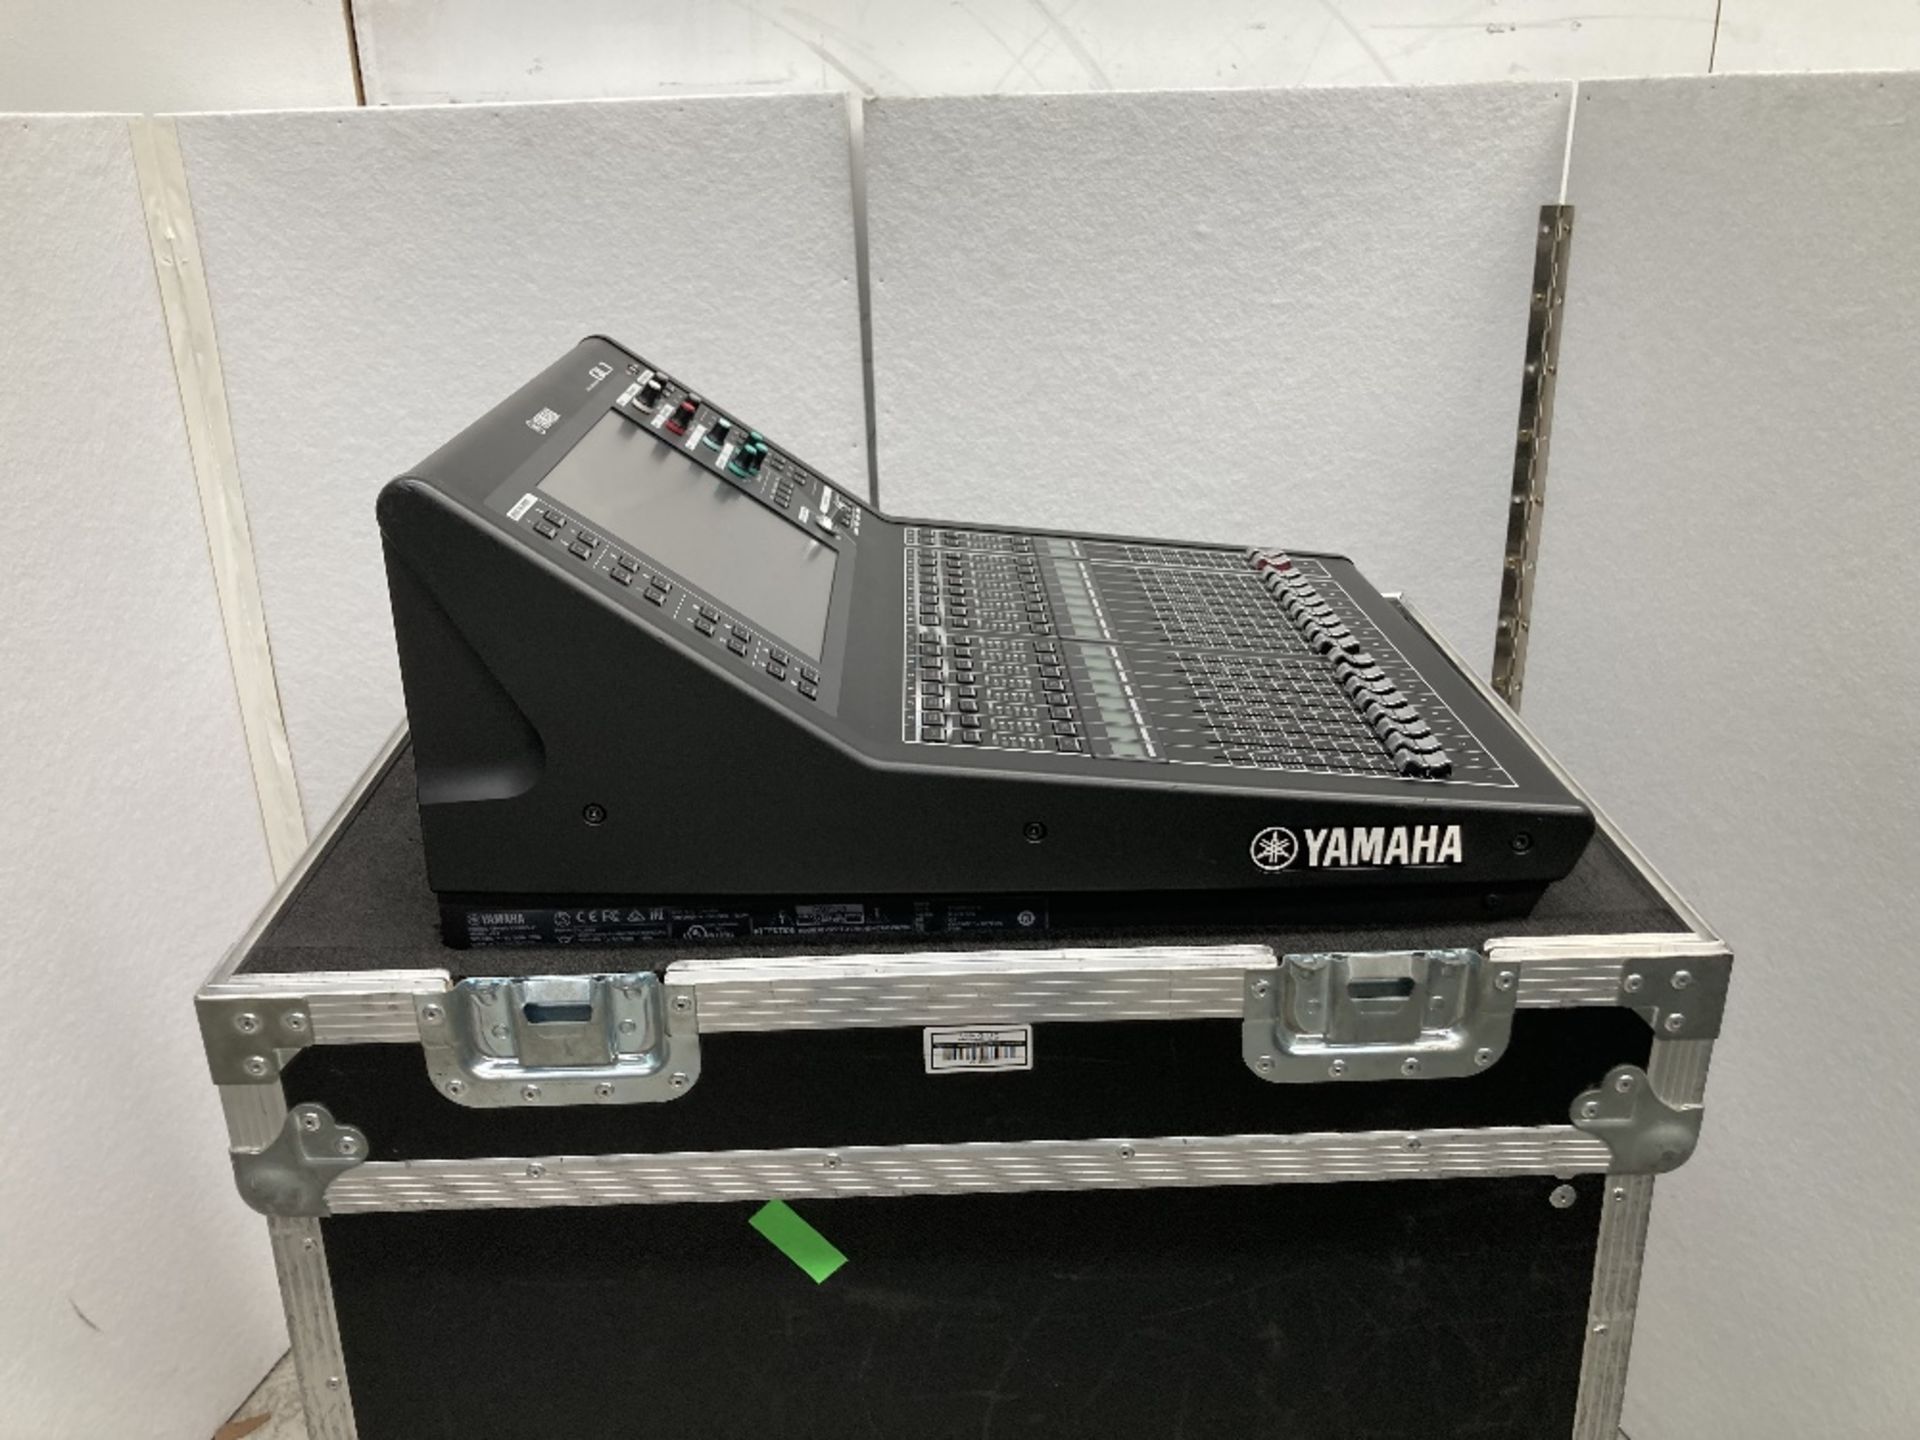 Yamaha QL1 Digital Mixing Console & Heavy Duty Mobile Flight Case - Image 3 of 14